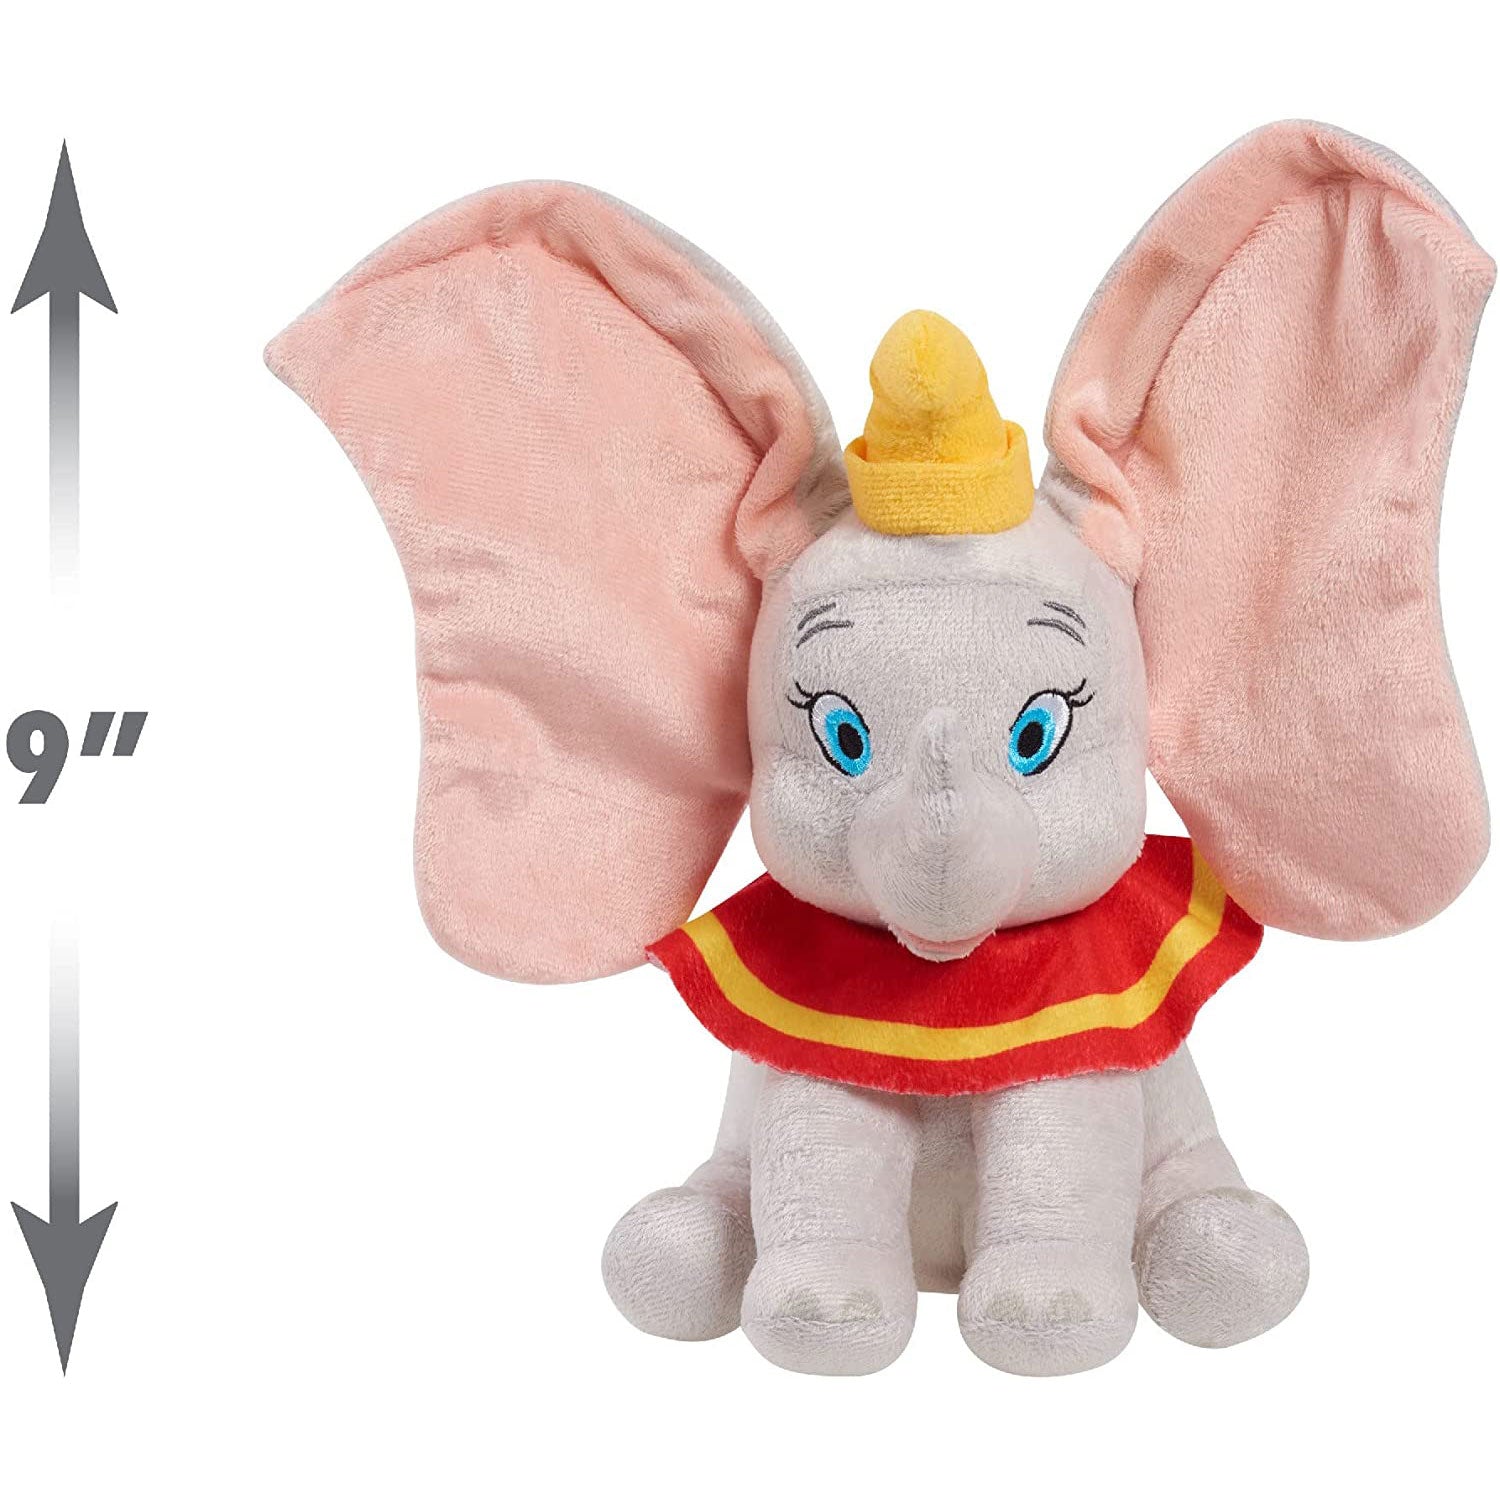 Disney Peek-A-Boo Dumbo Plush